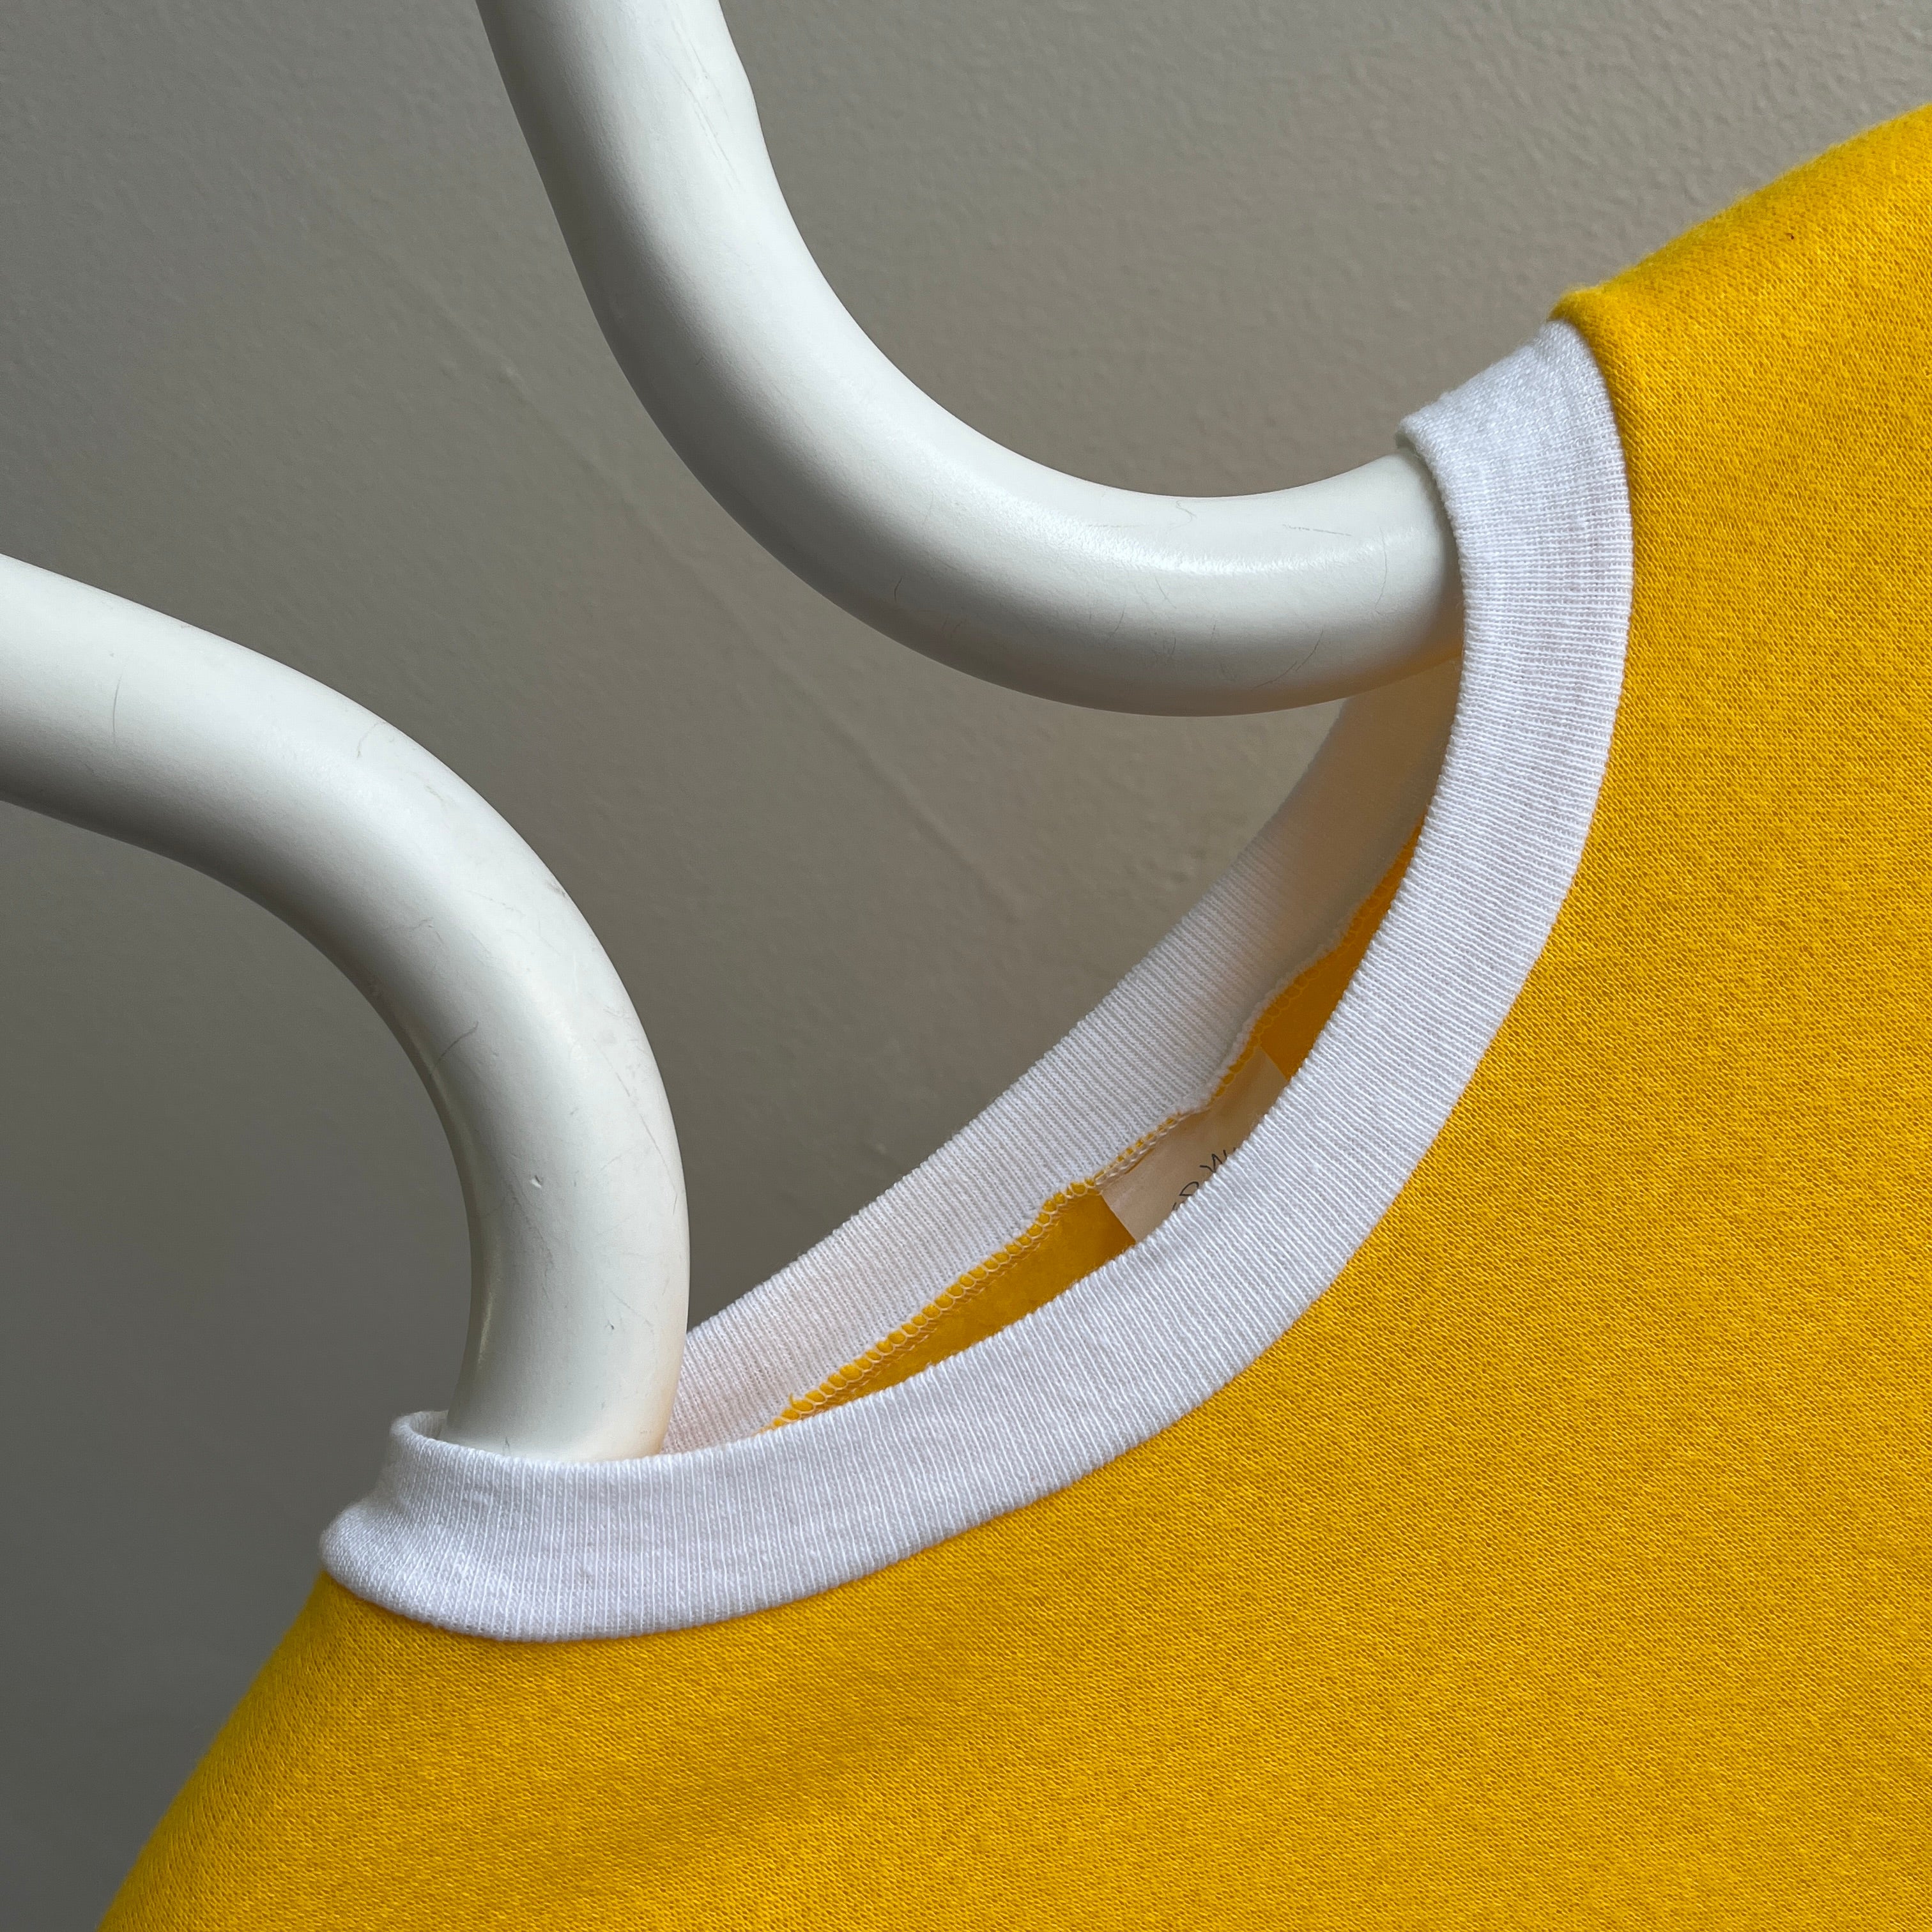 1980s Thin Yellow and White Color Block Sweatshirt - Barely Worn